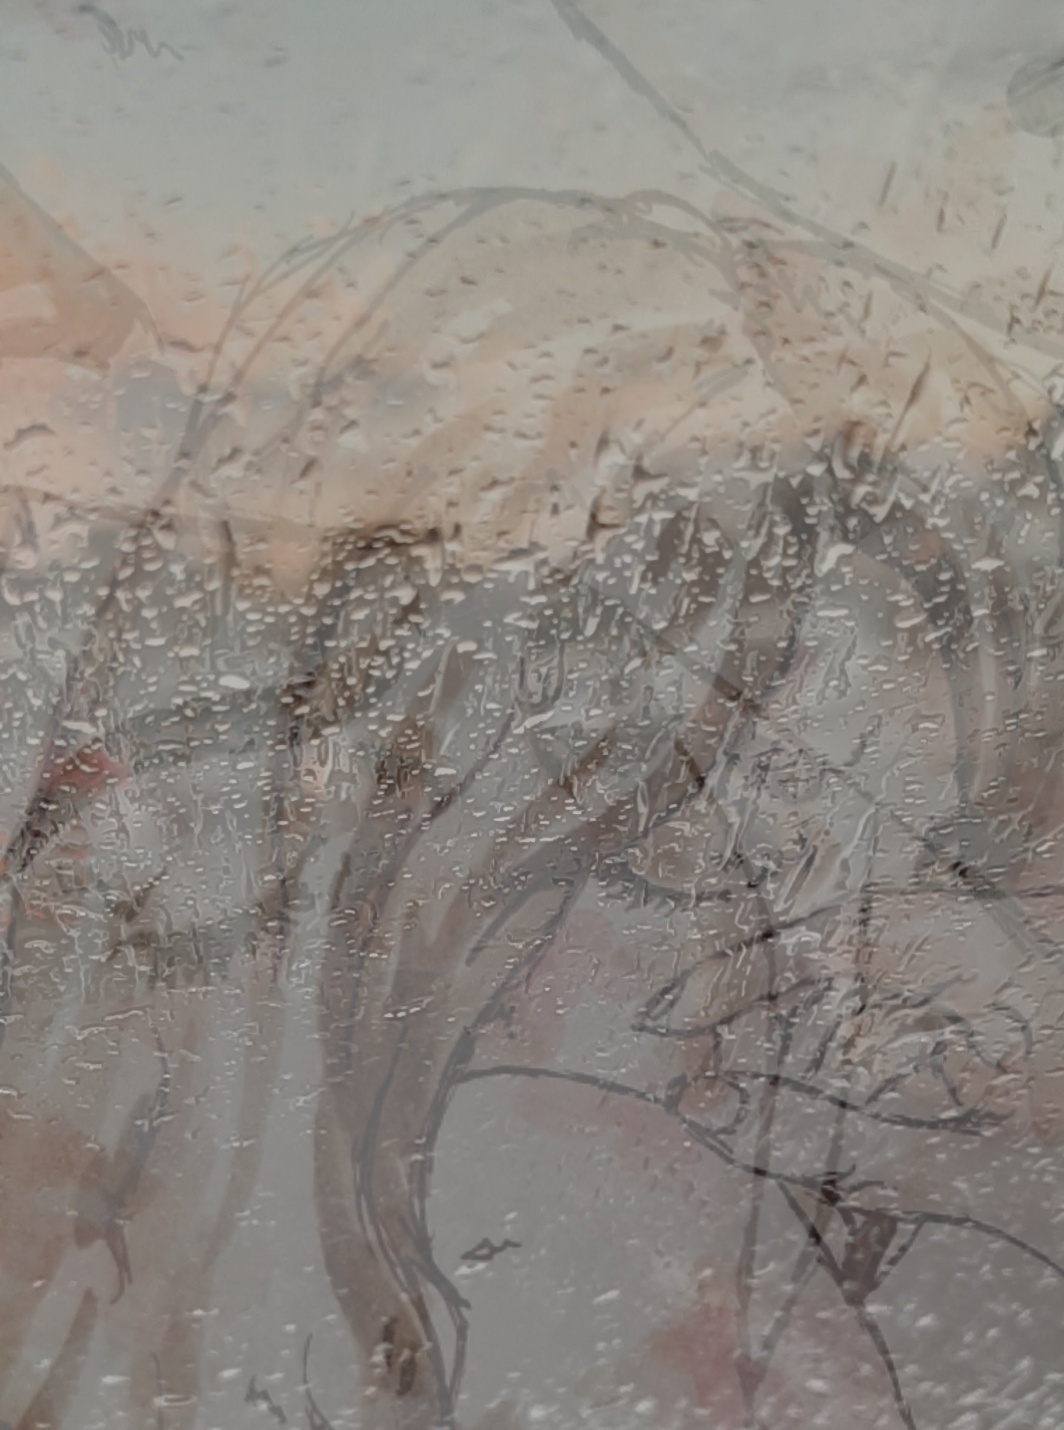 Watercolour & rain double exposure. (2020).